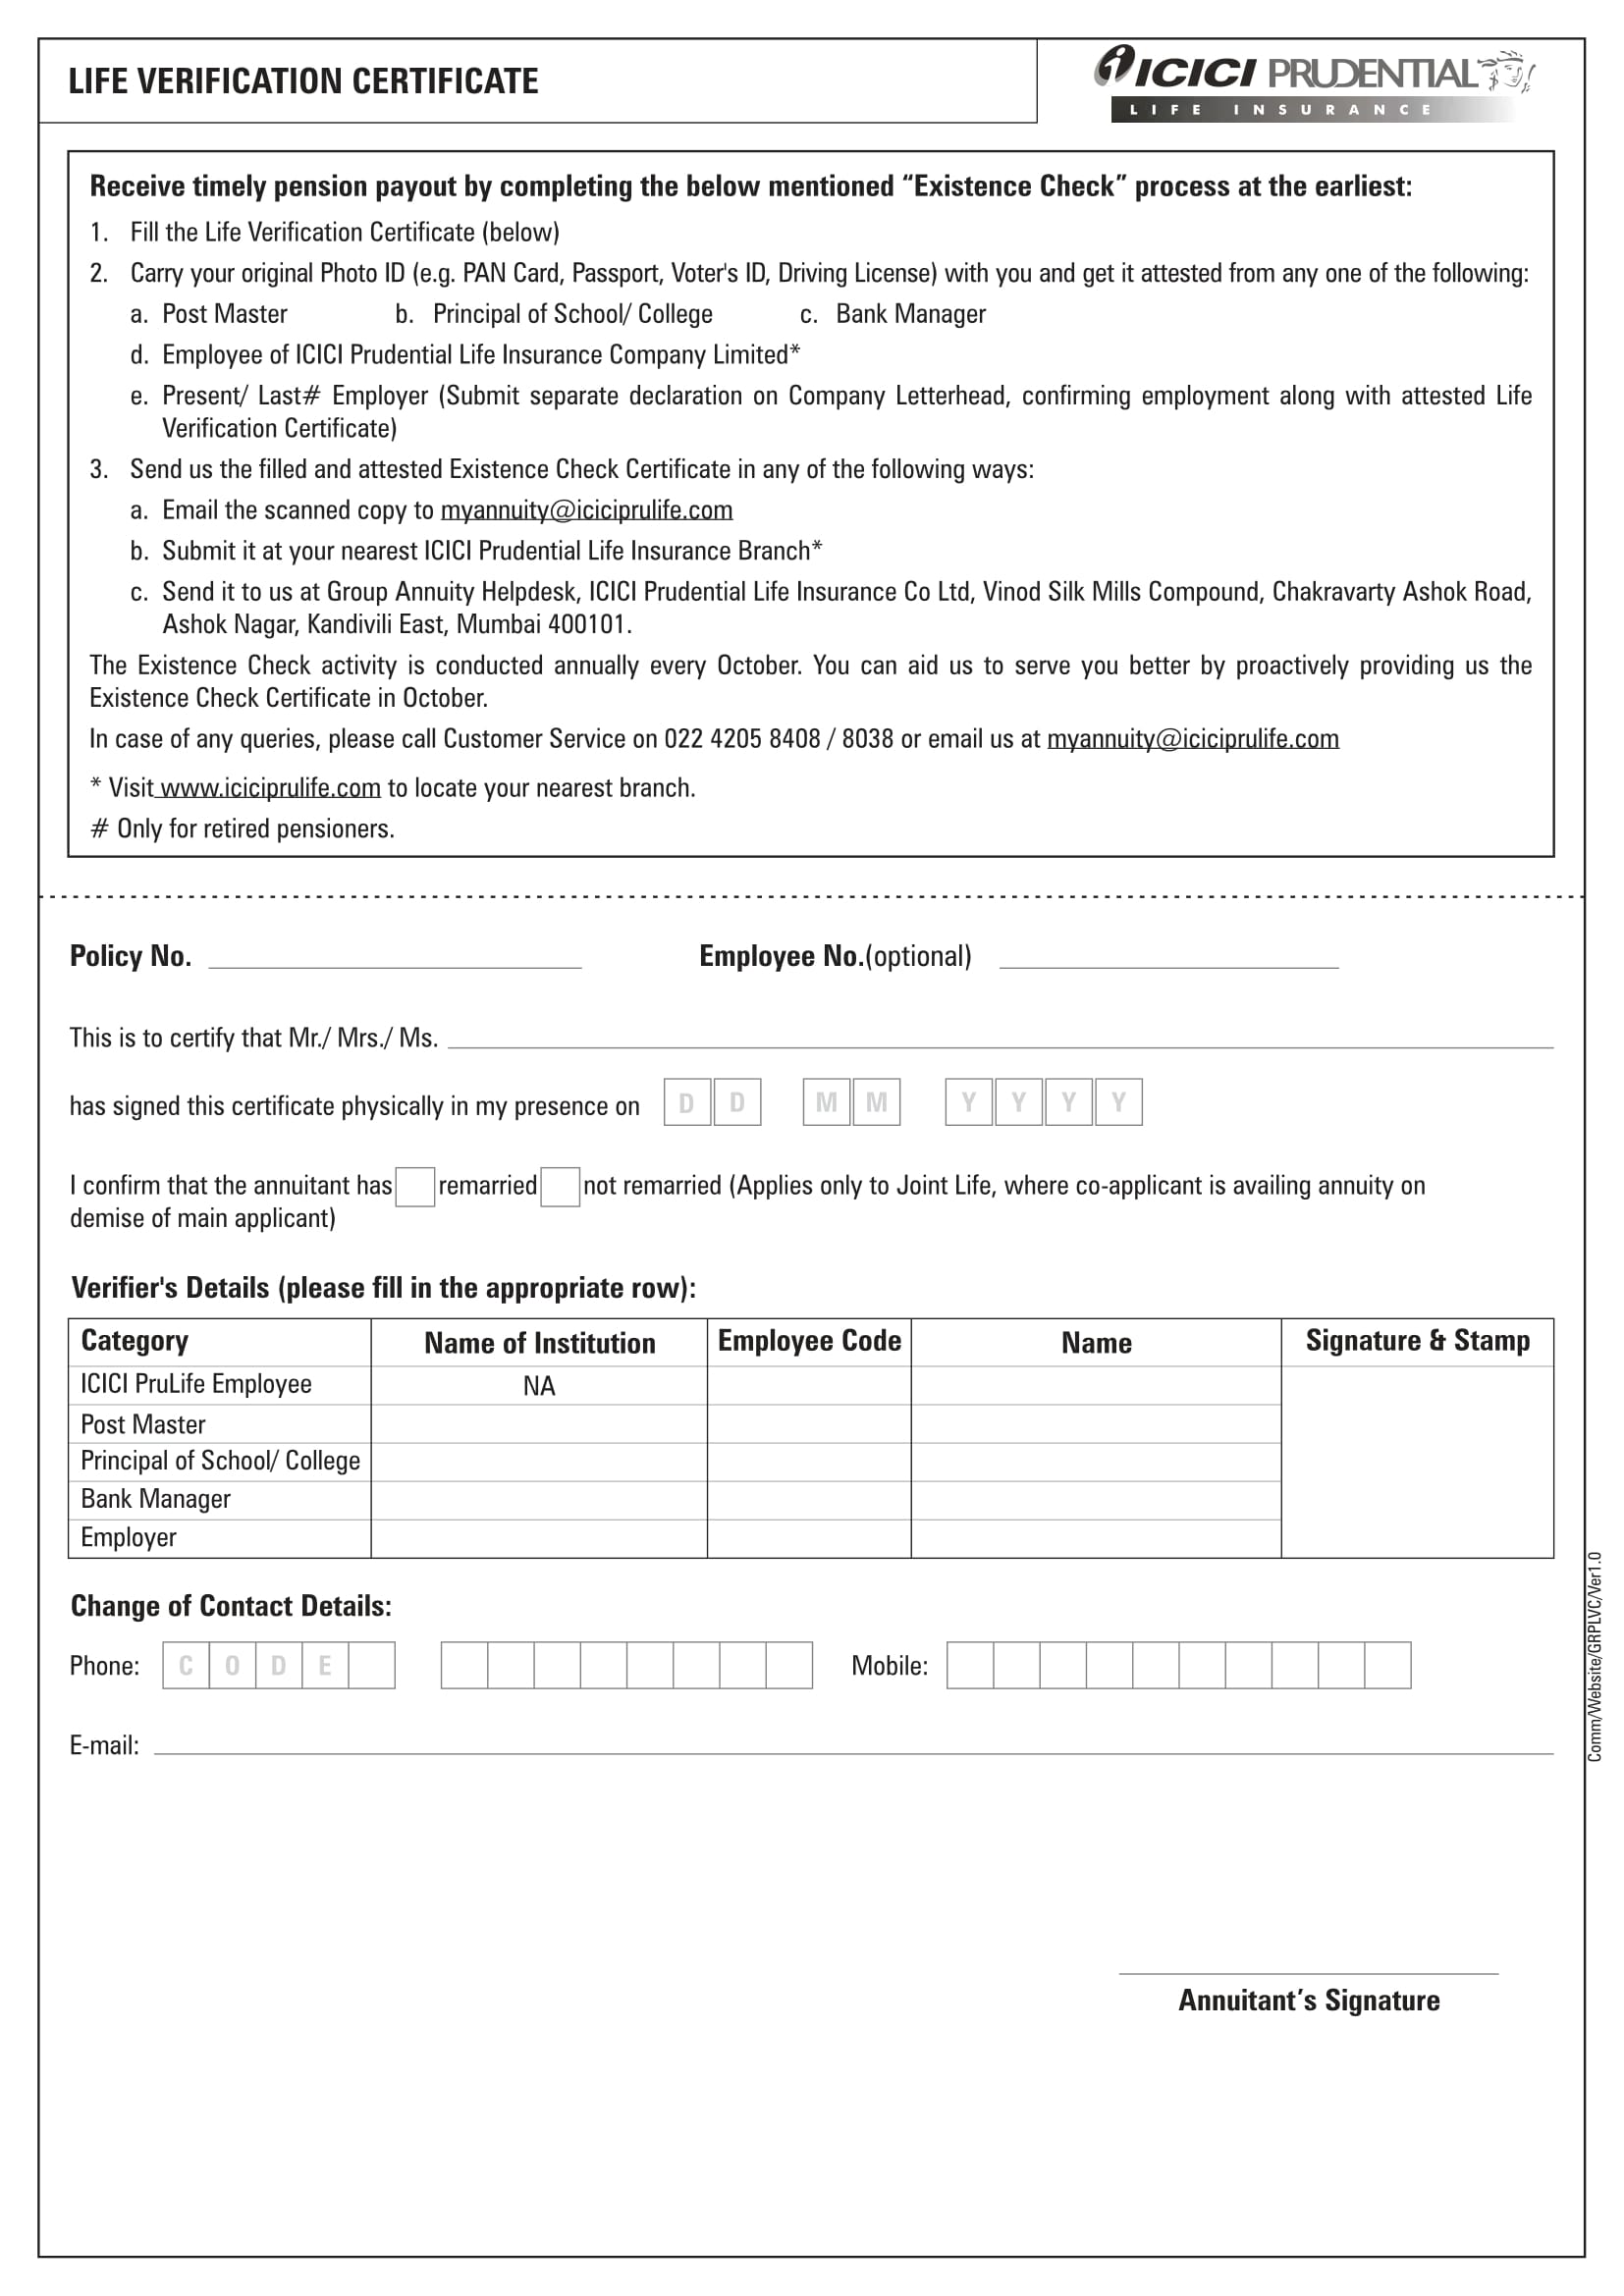 life verification certificate form 1